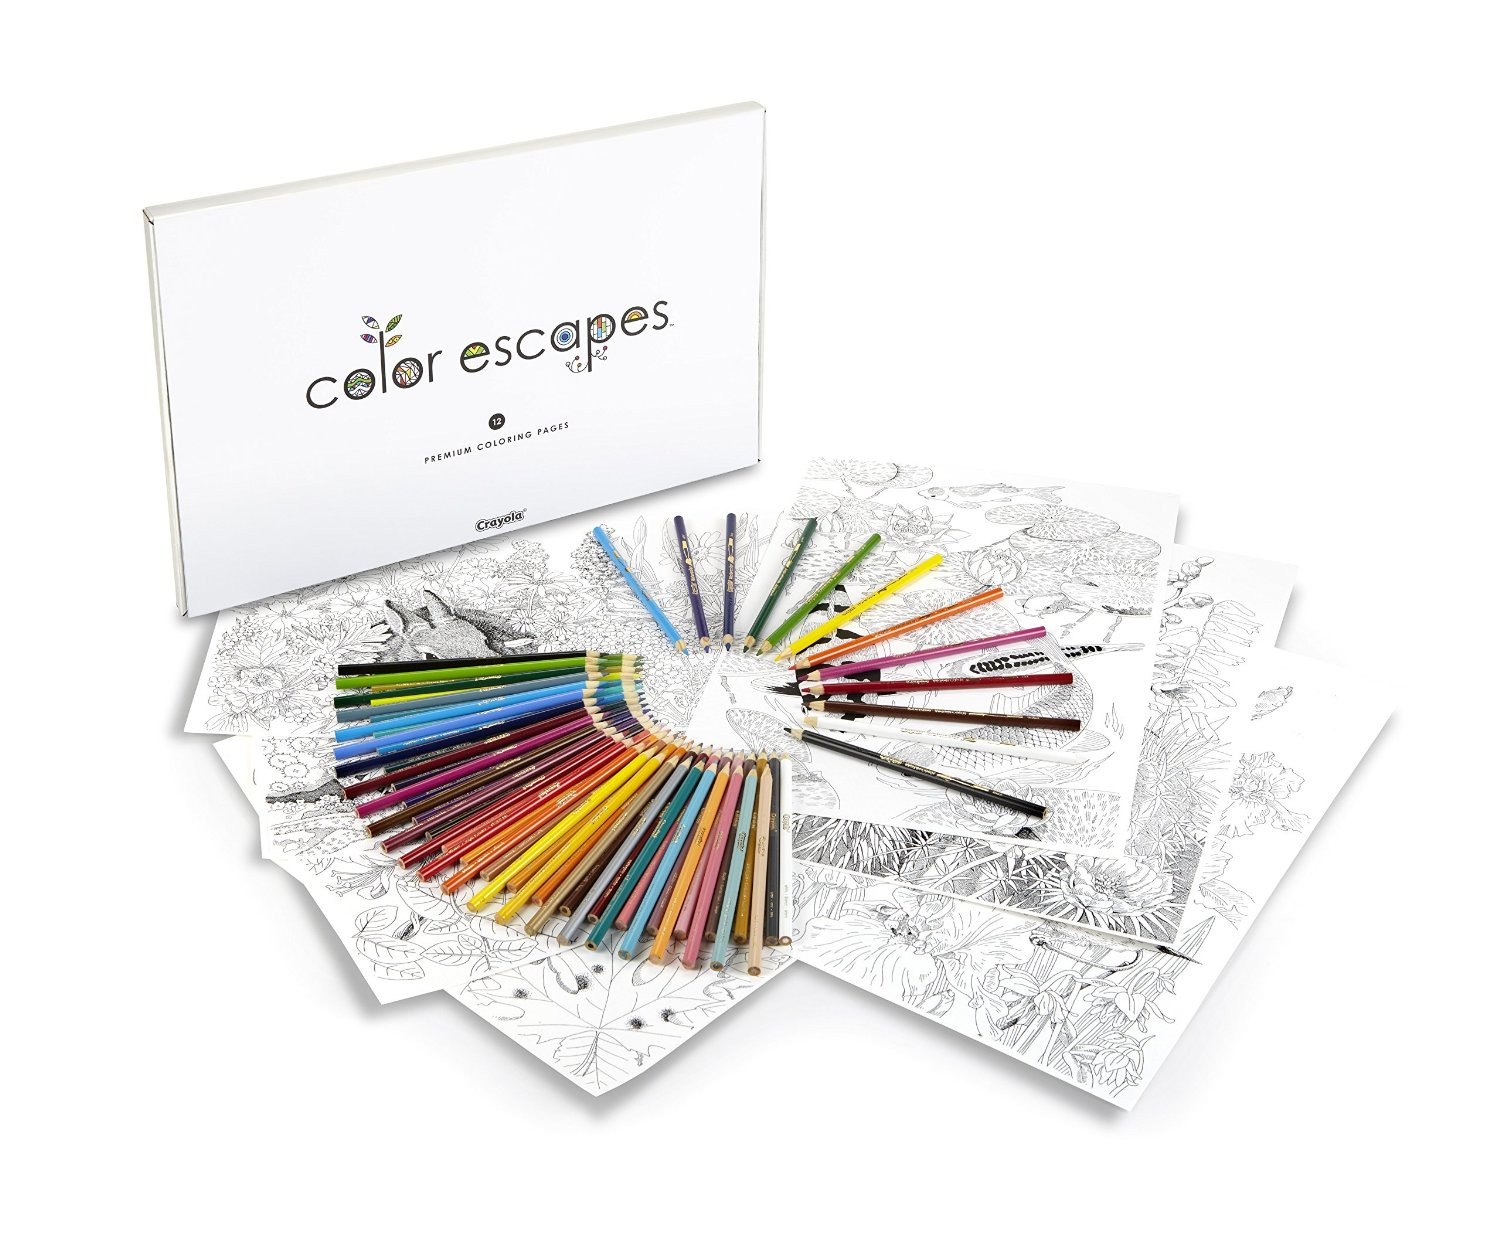 Adult Coloring Books Crayola
 Crayola Color Escapes Adult Coloring Books Coloring Pages